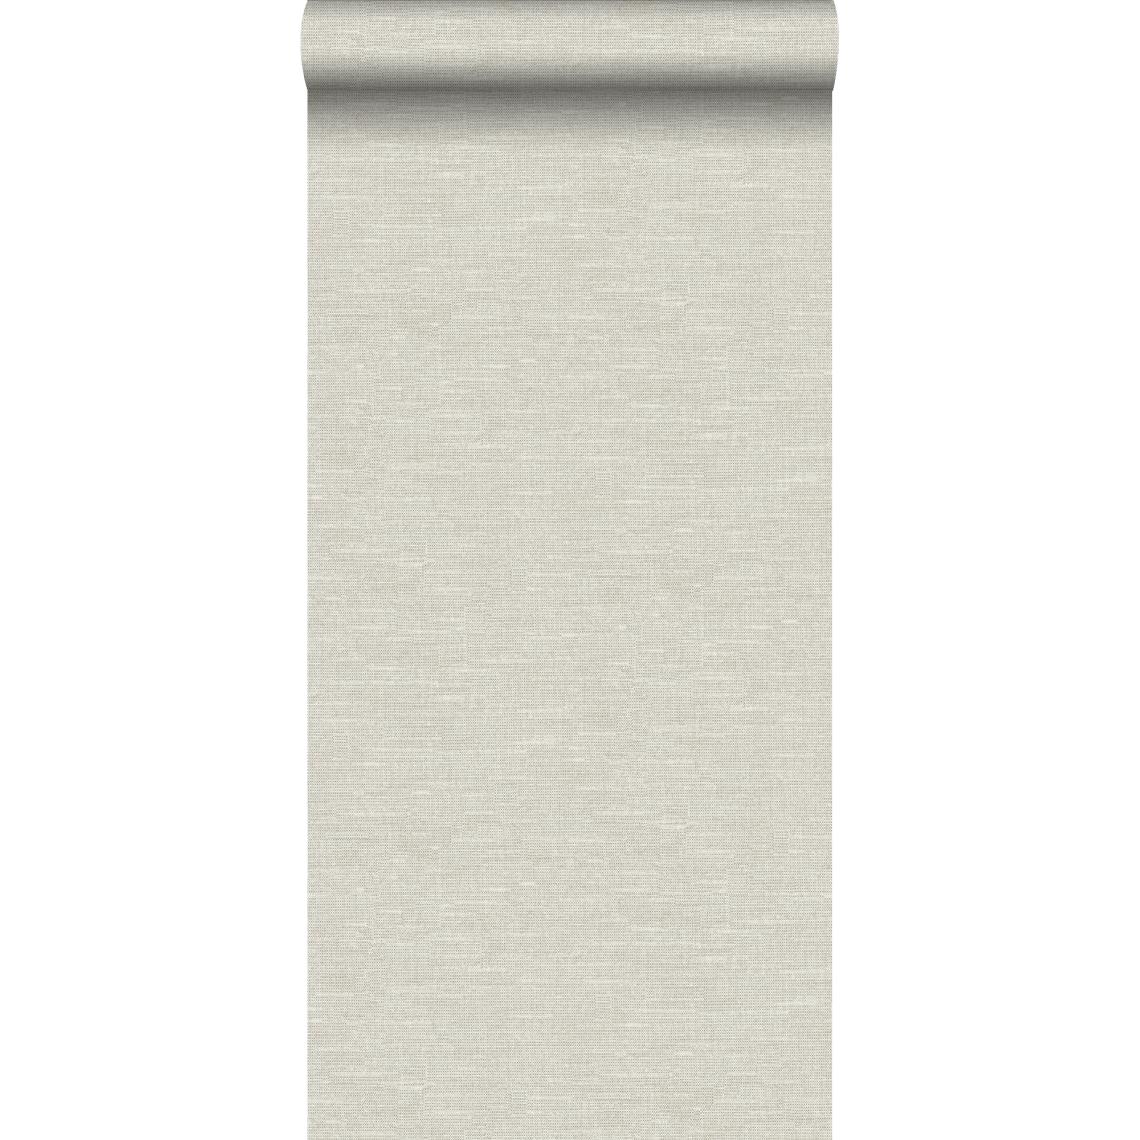 Origin - Origin papier peint lin beige clair - 347638 - 0.53 x 10.05 m - Papier peint